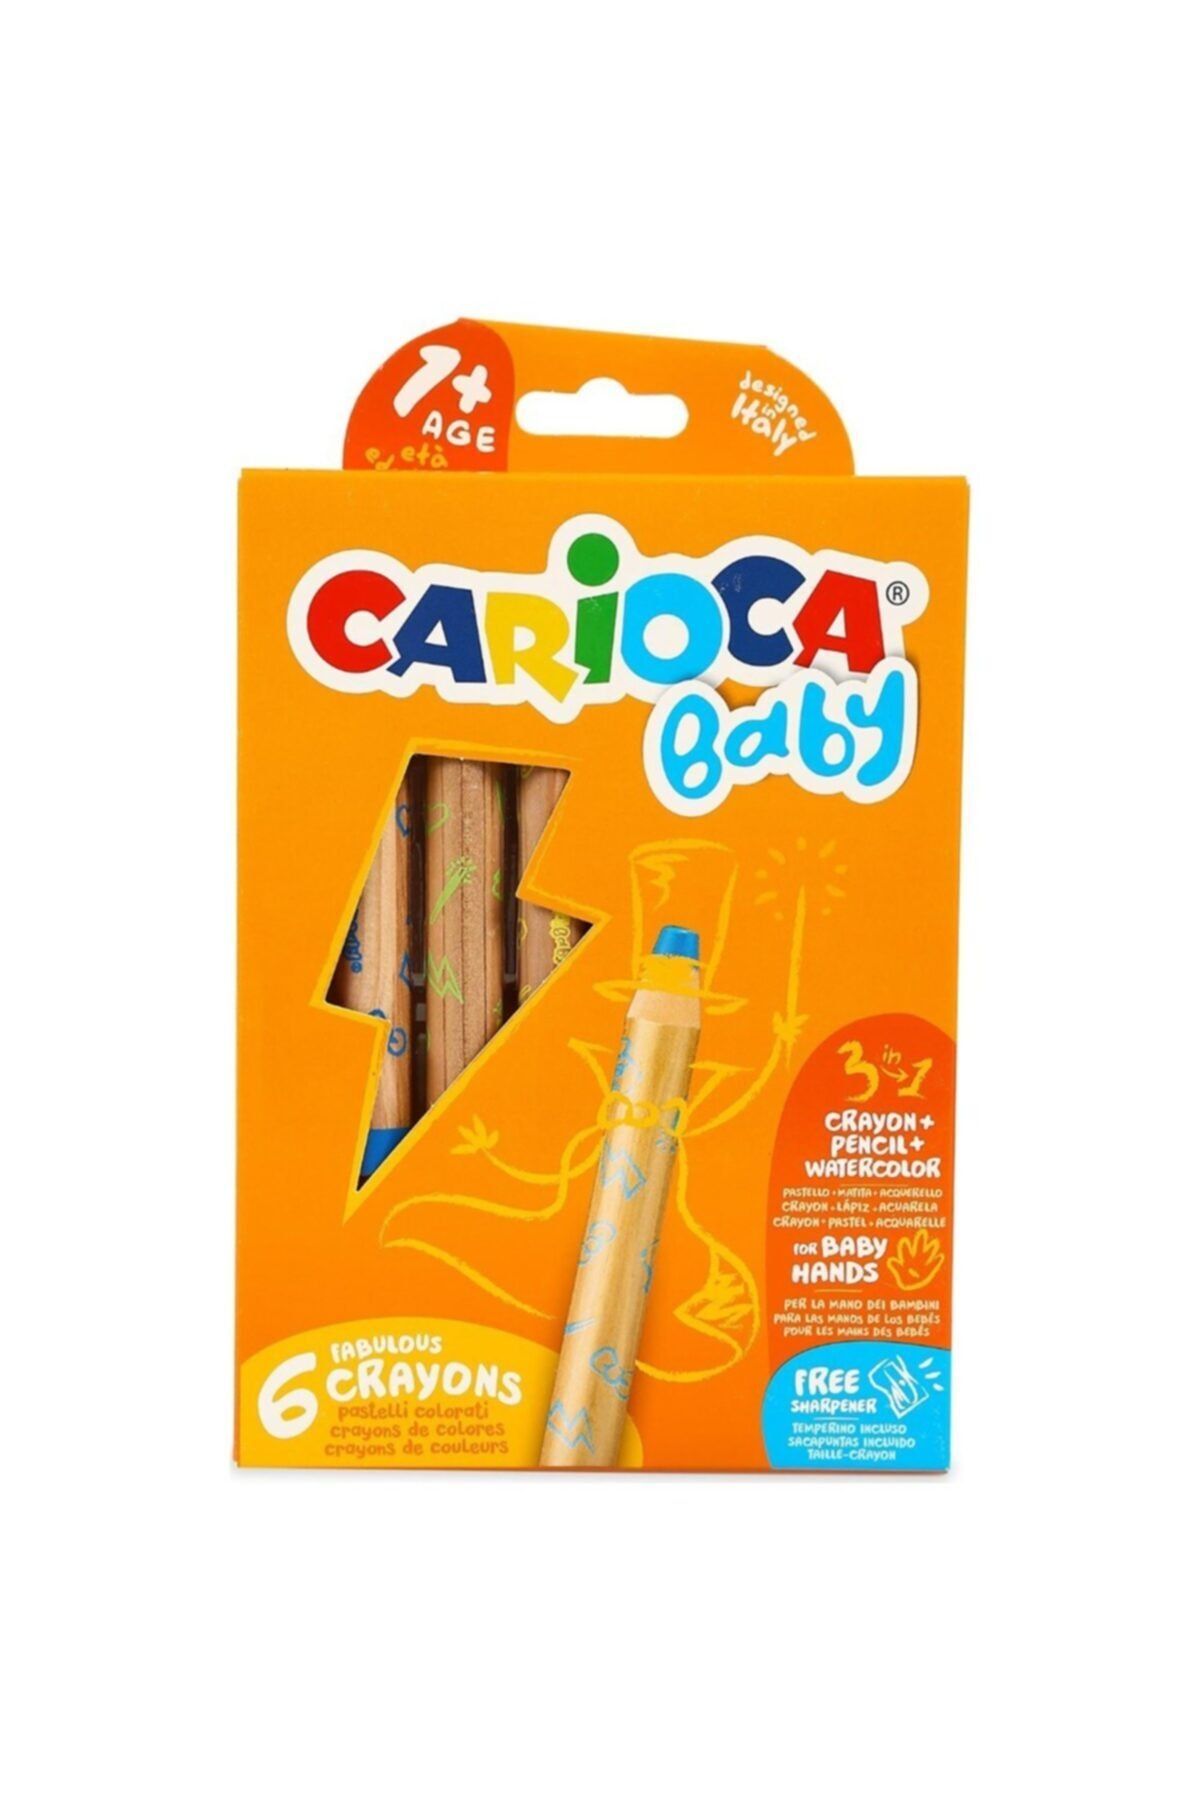 Carioca مداد شمعی بدنه چوبی جامبو بیبی 3 در 1 ست 6 تایی (مداد تراش) PR983456274940